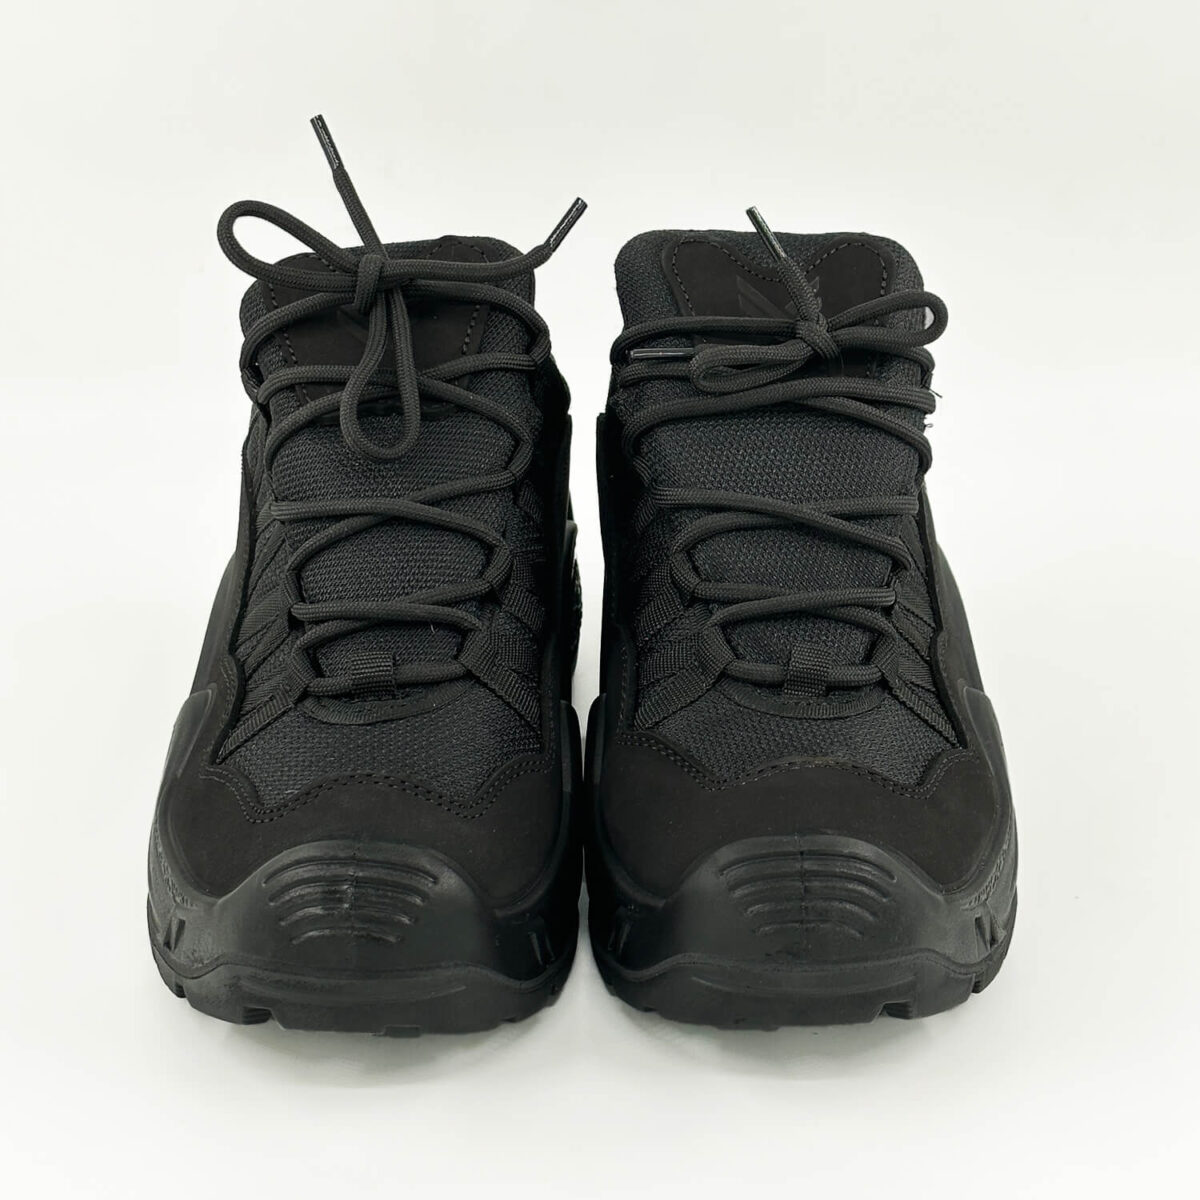 siyah outdoor ayakkabi sugecirmez waterproof vogel1493c